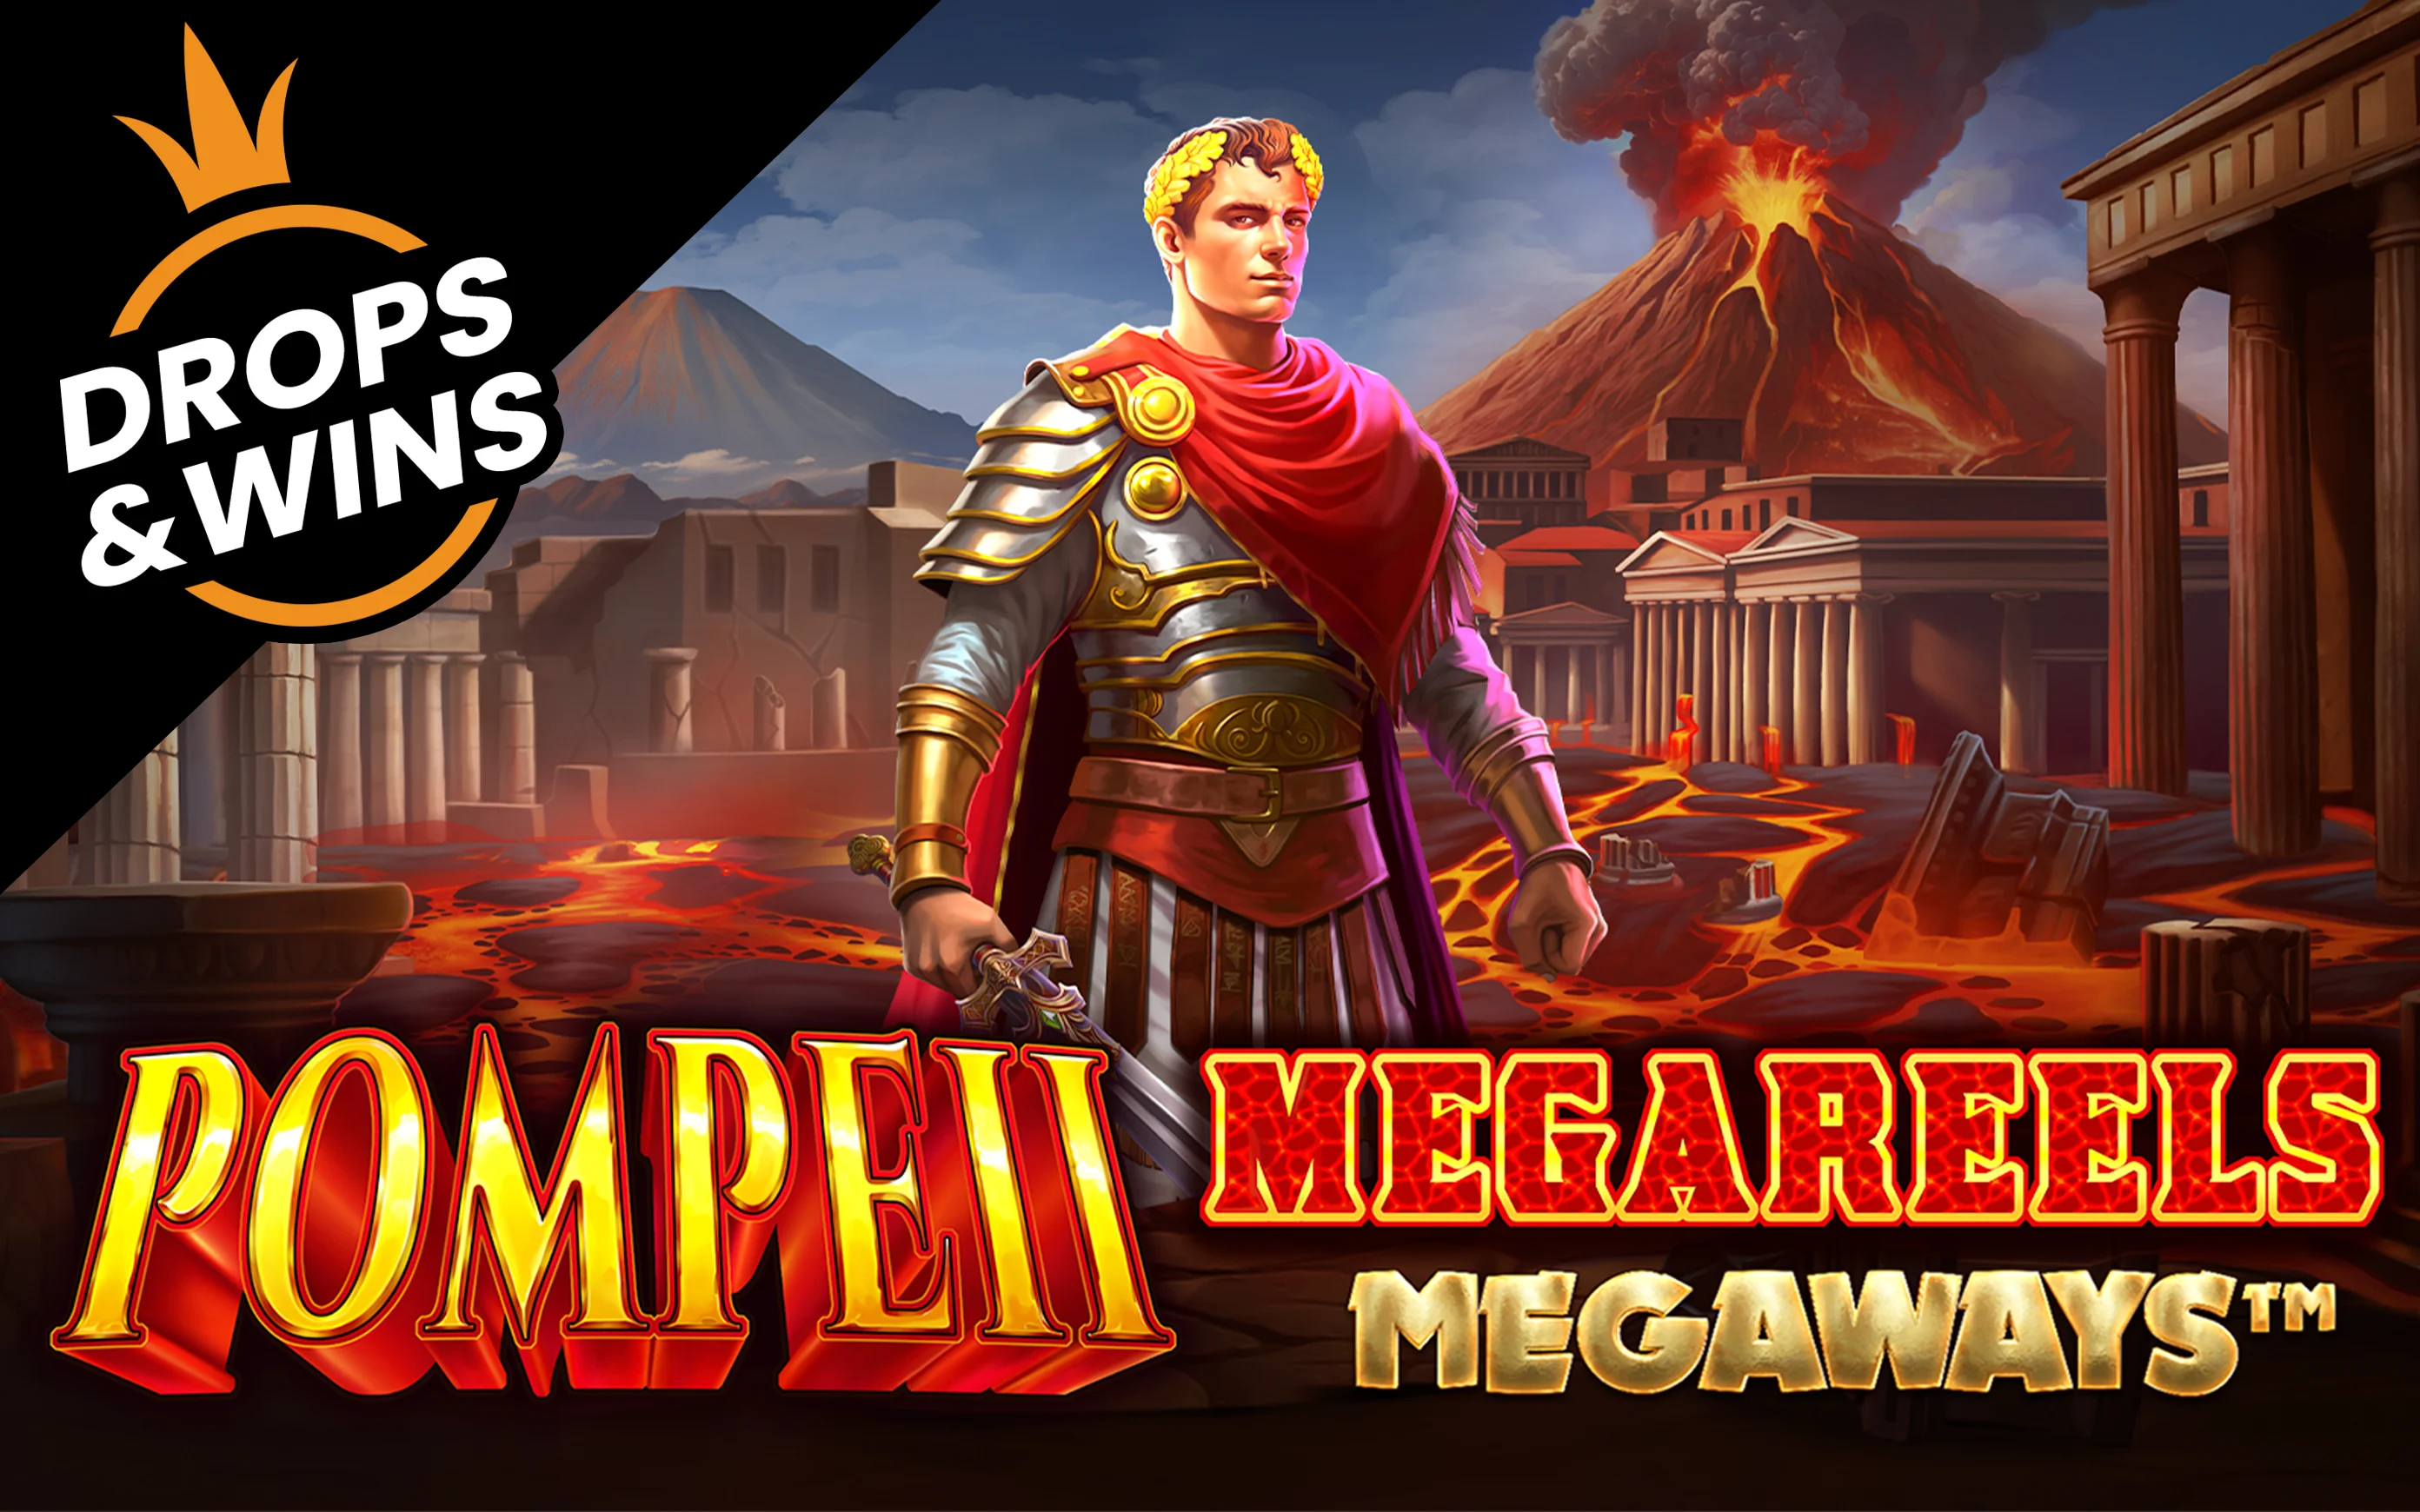 Играйте в Pompeii Megareels Megaways™ в онлайн-казино Starcasino.be